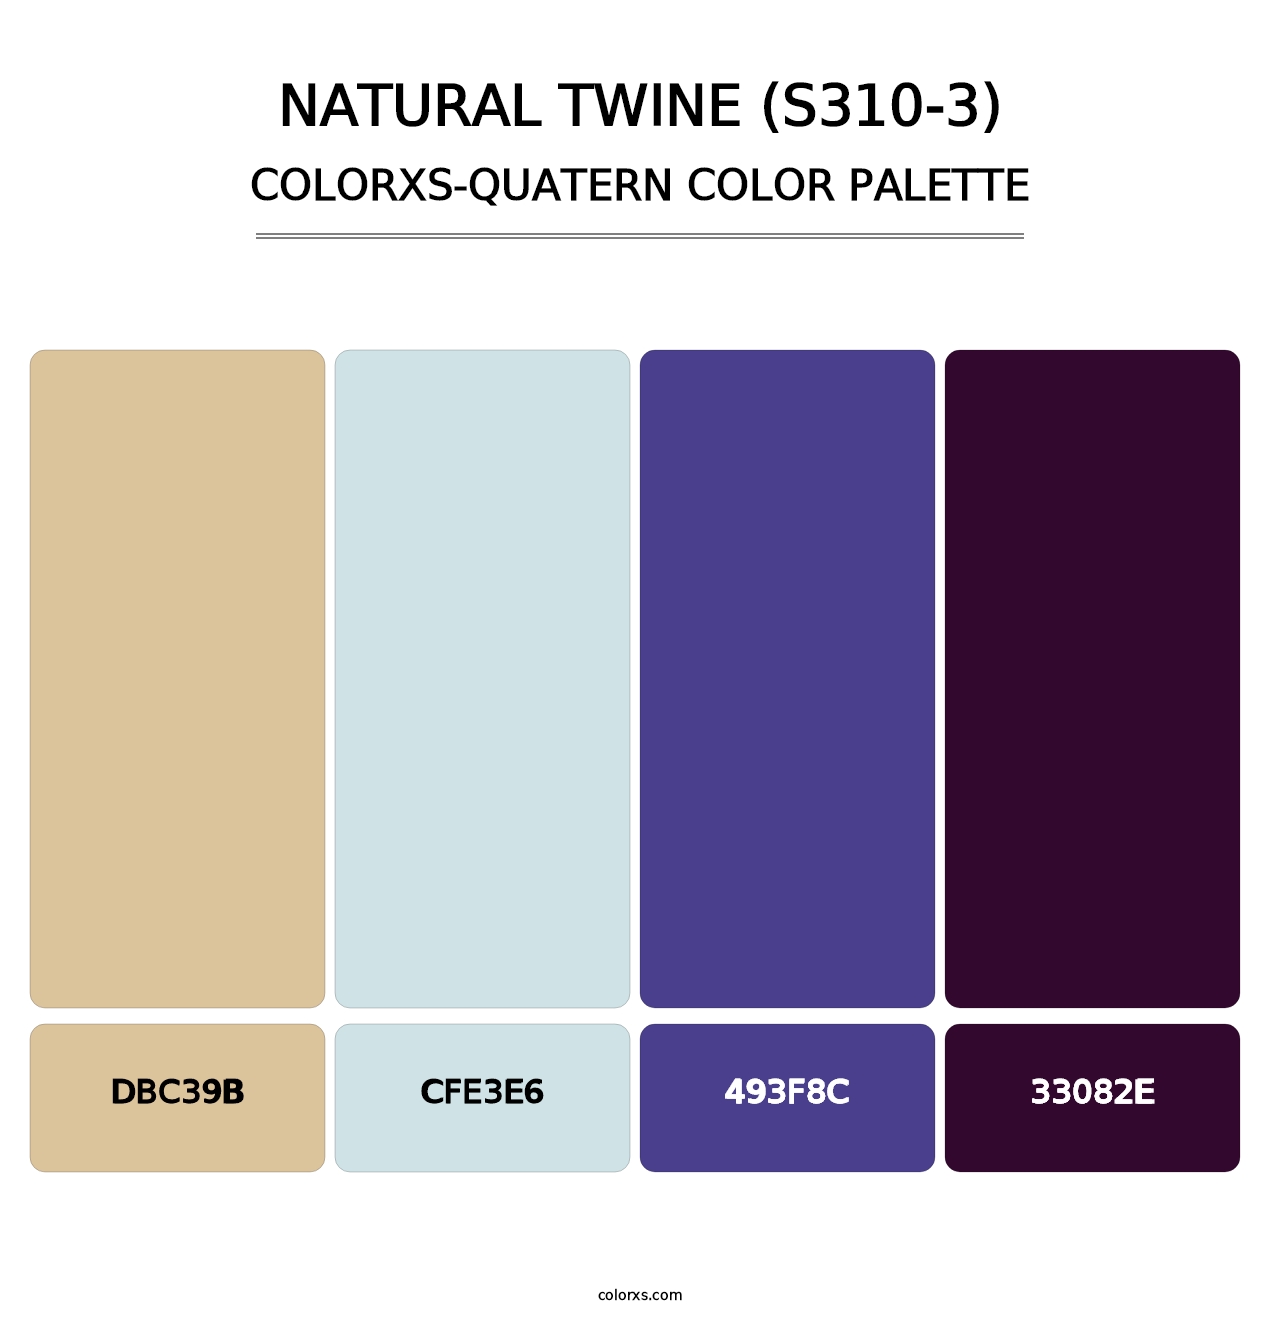 Natural Twine (S310-3) - Colorxs Quatern Palette